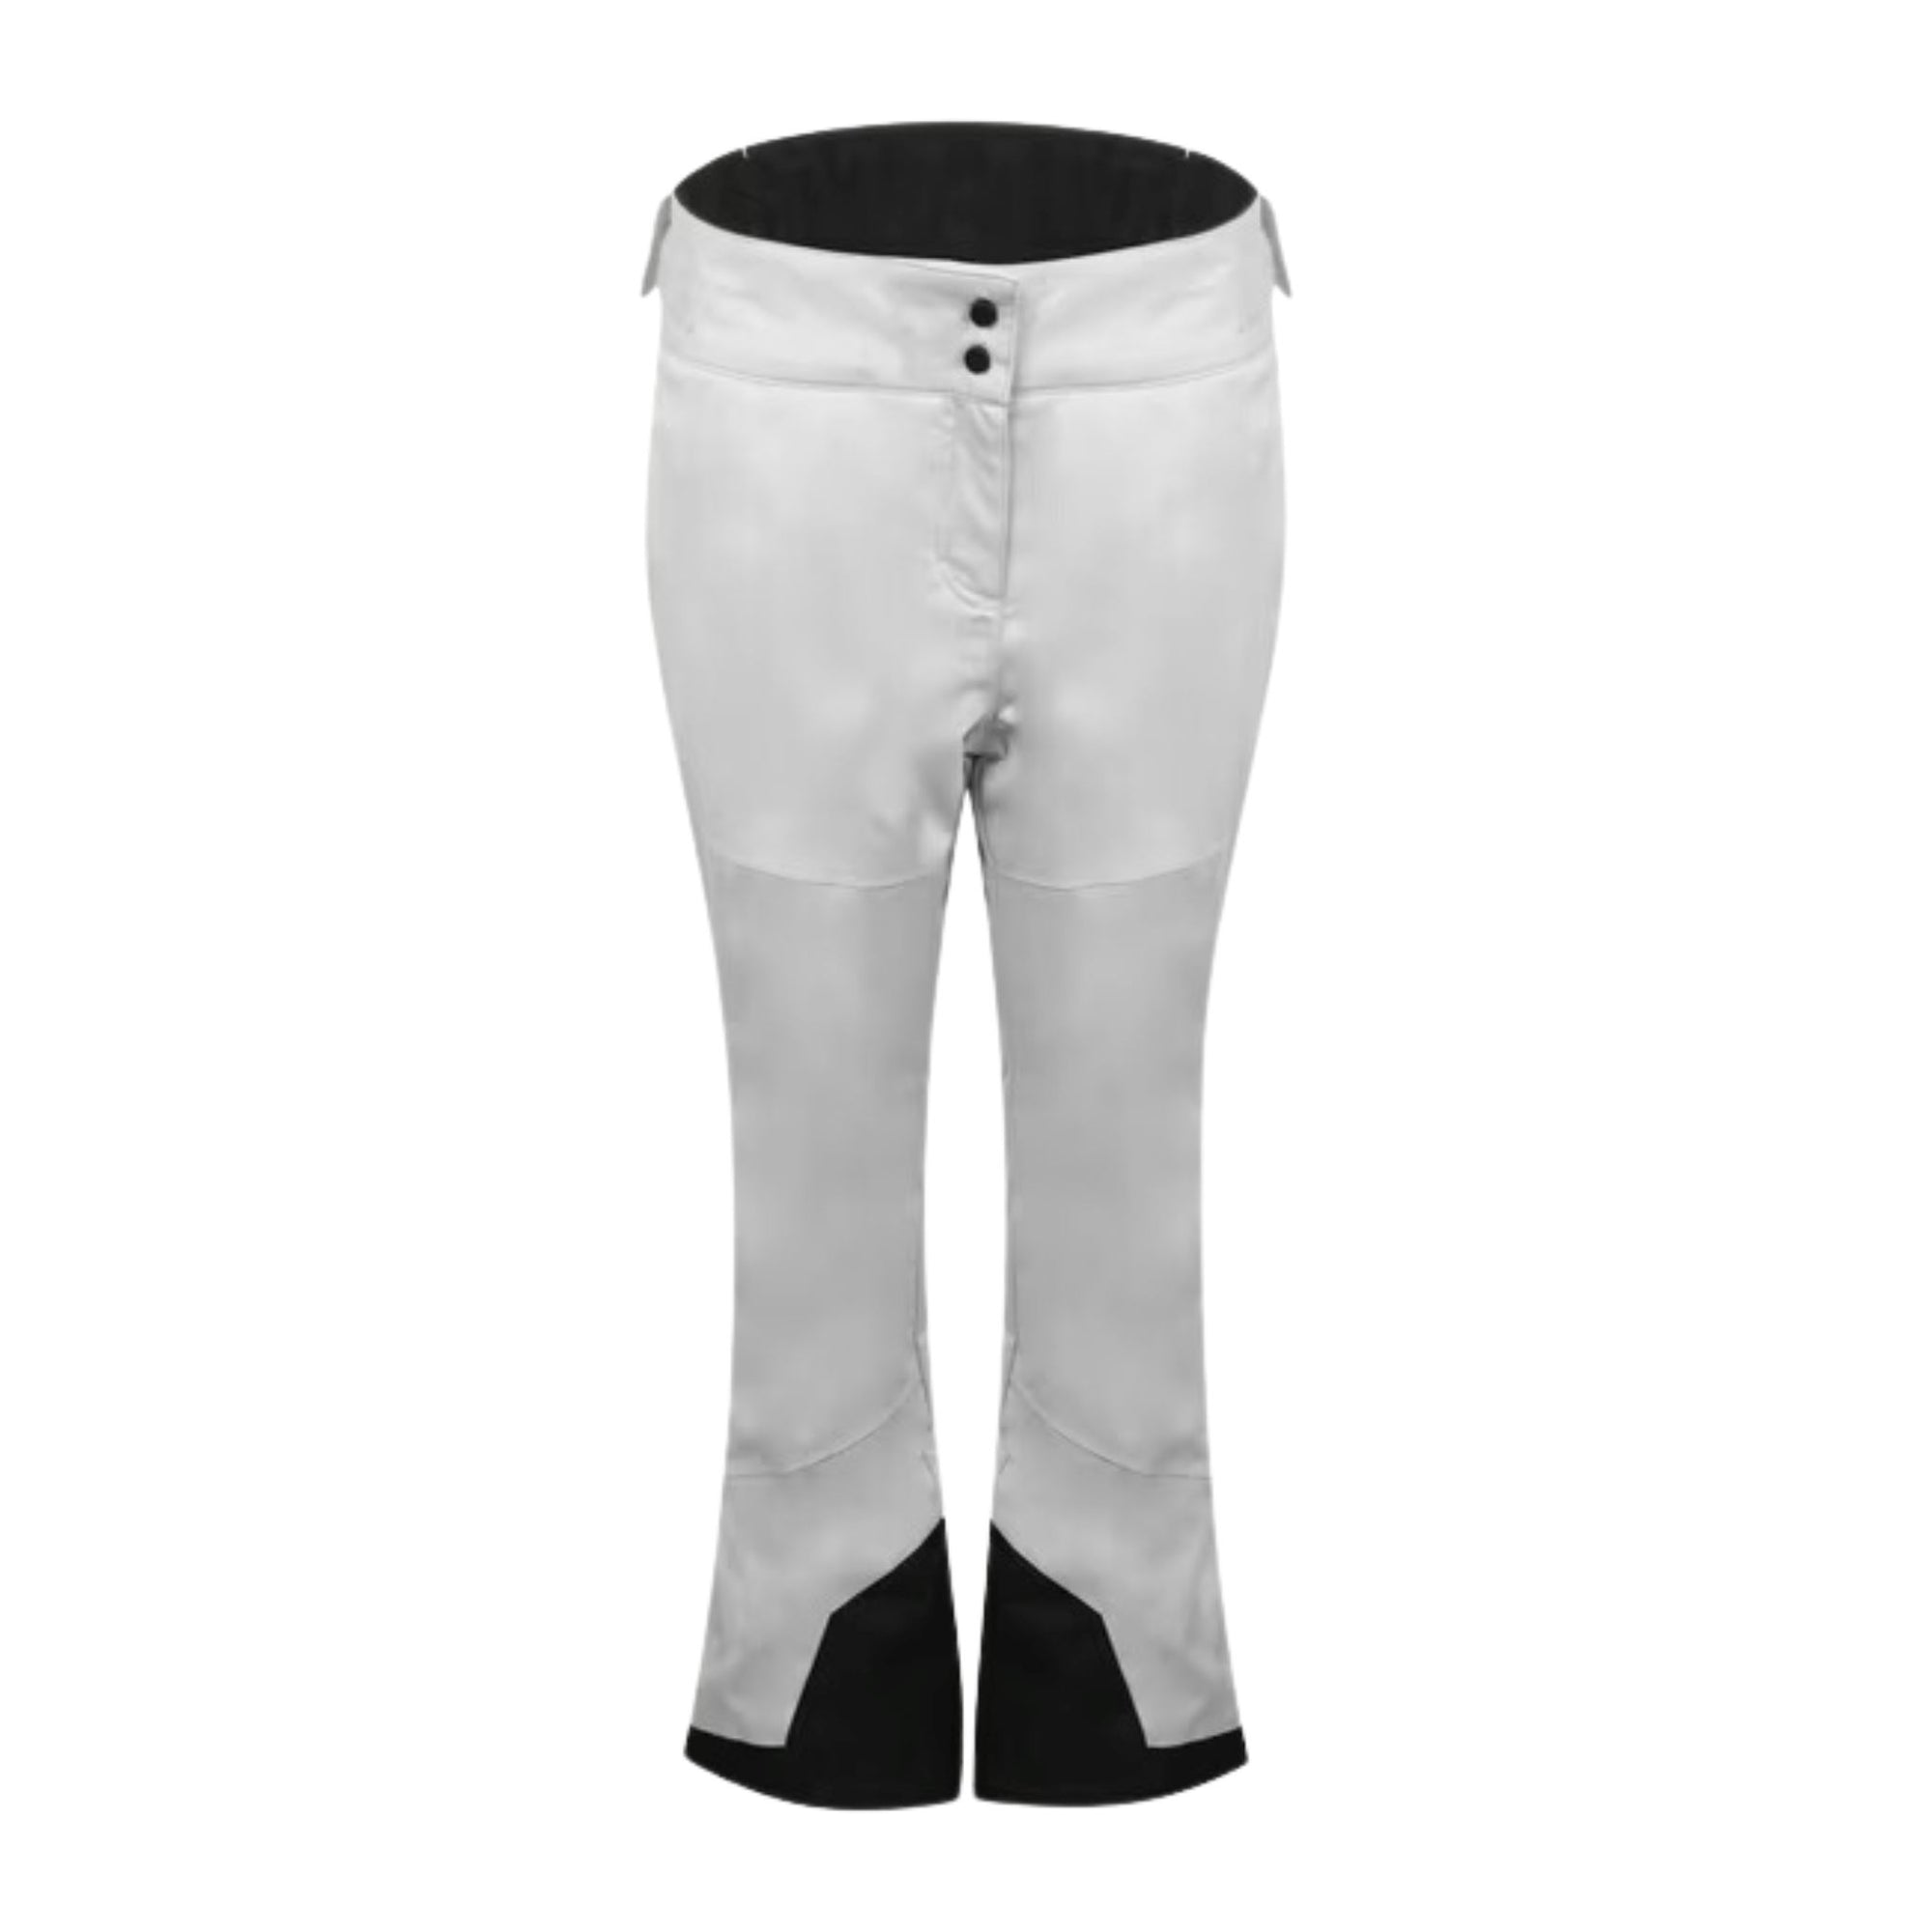 Girls Kjus Carpa Pants - White Pants Kjus 152 INTL / 10-12 AU 